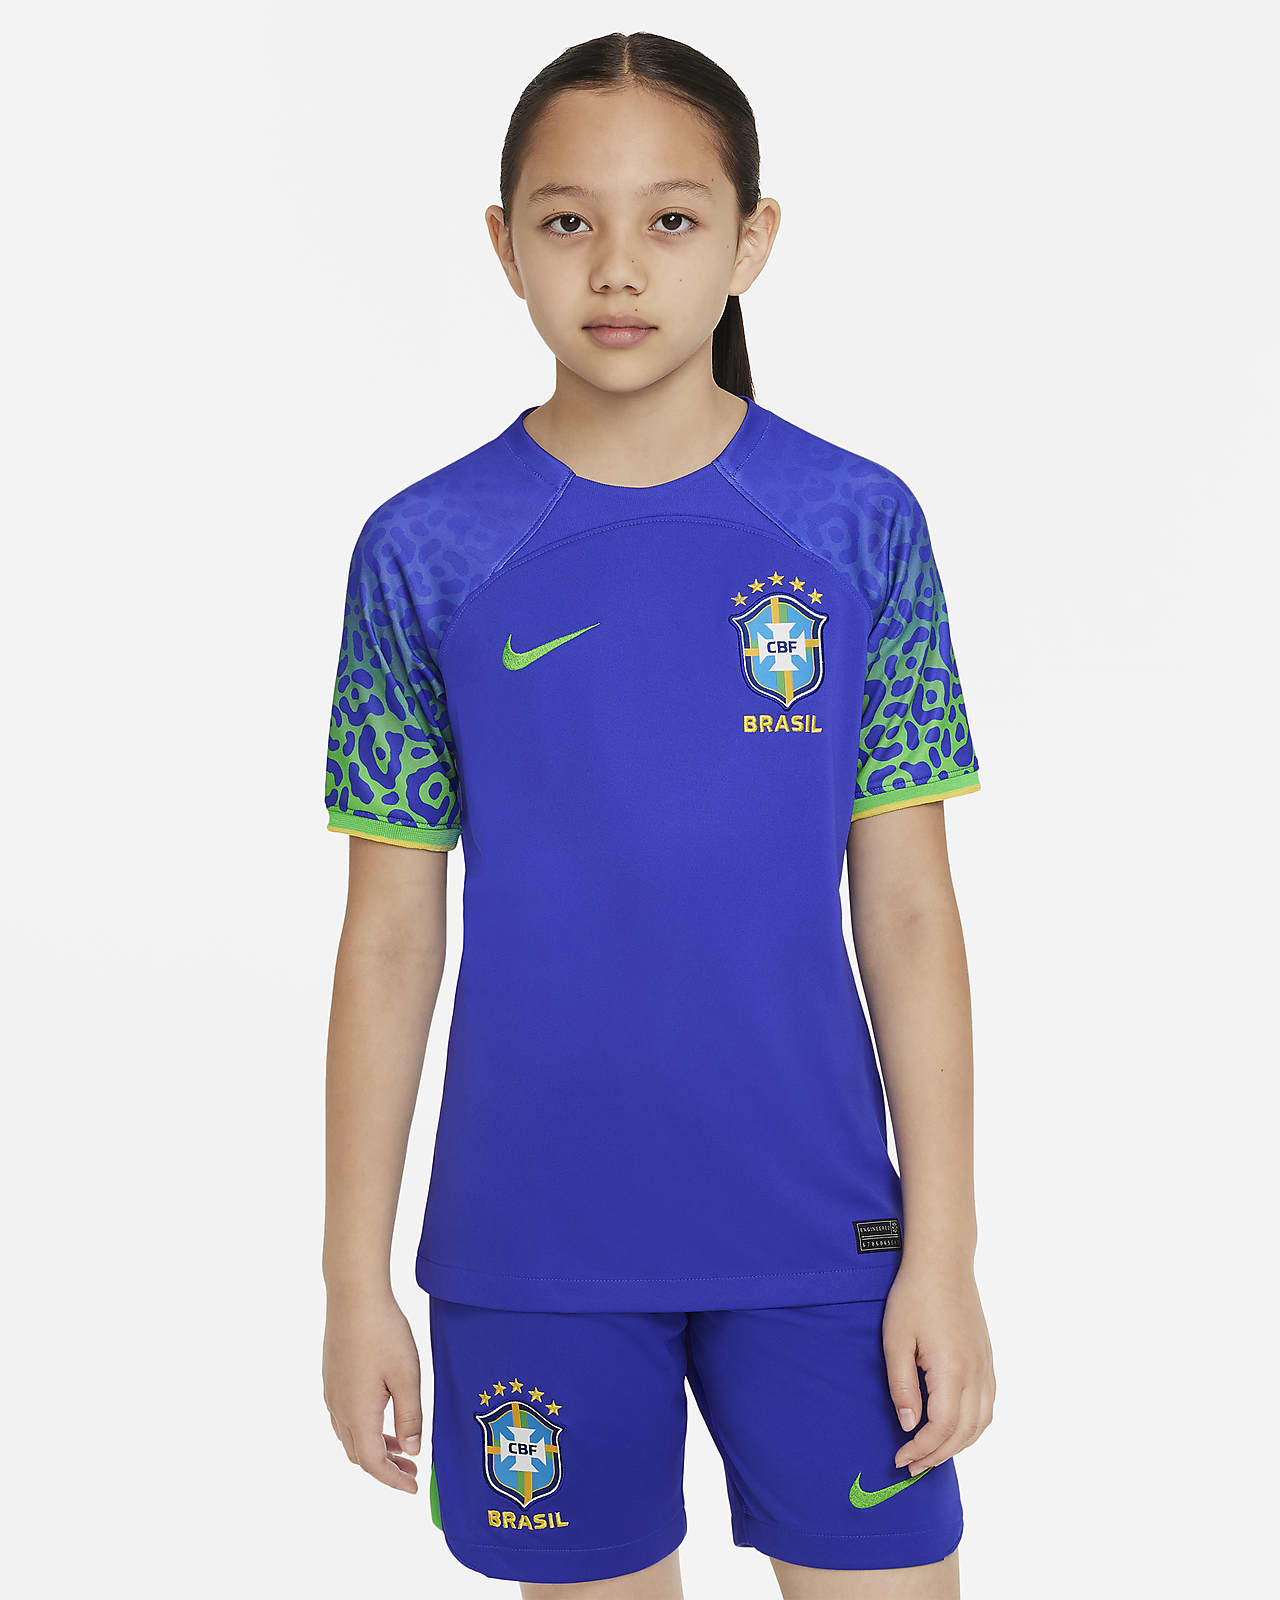 Brasilien landslagströja - Köp din Brasilien tröja här!